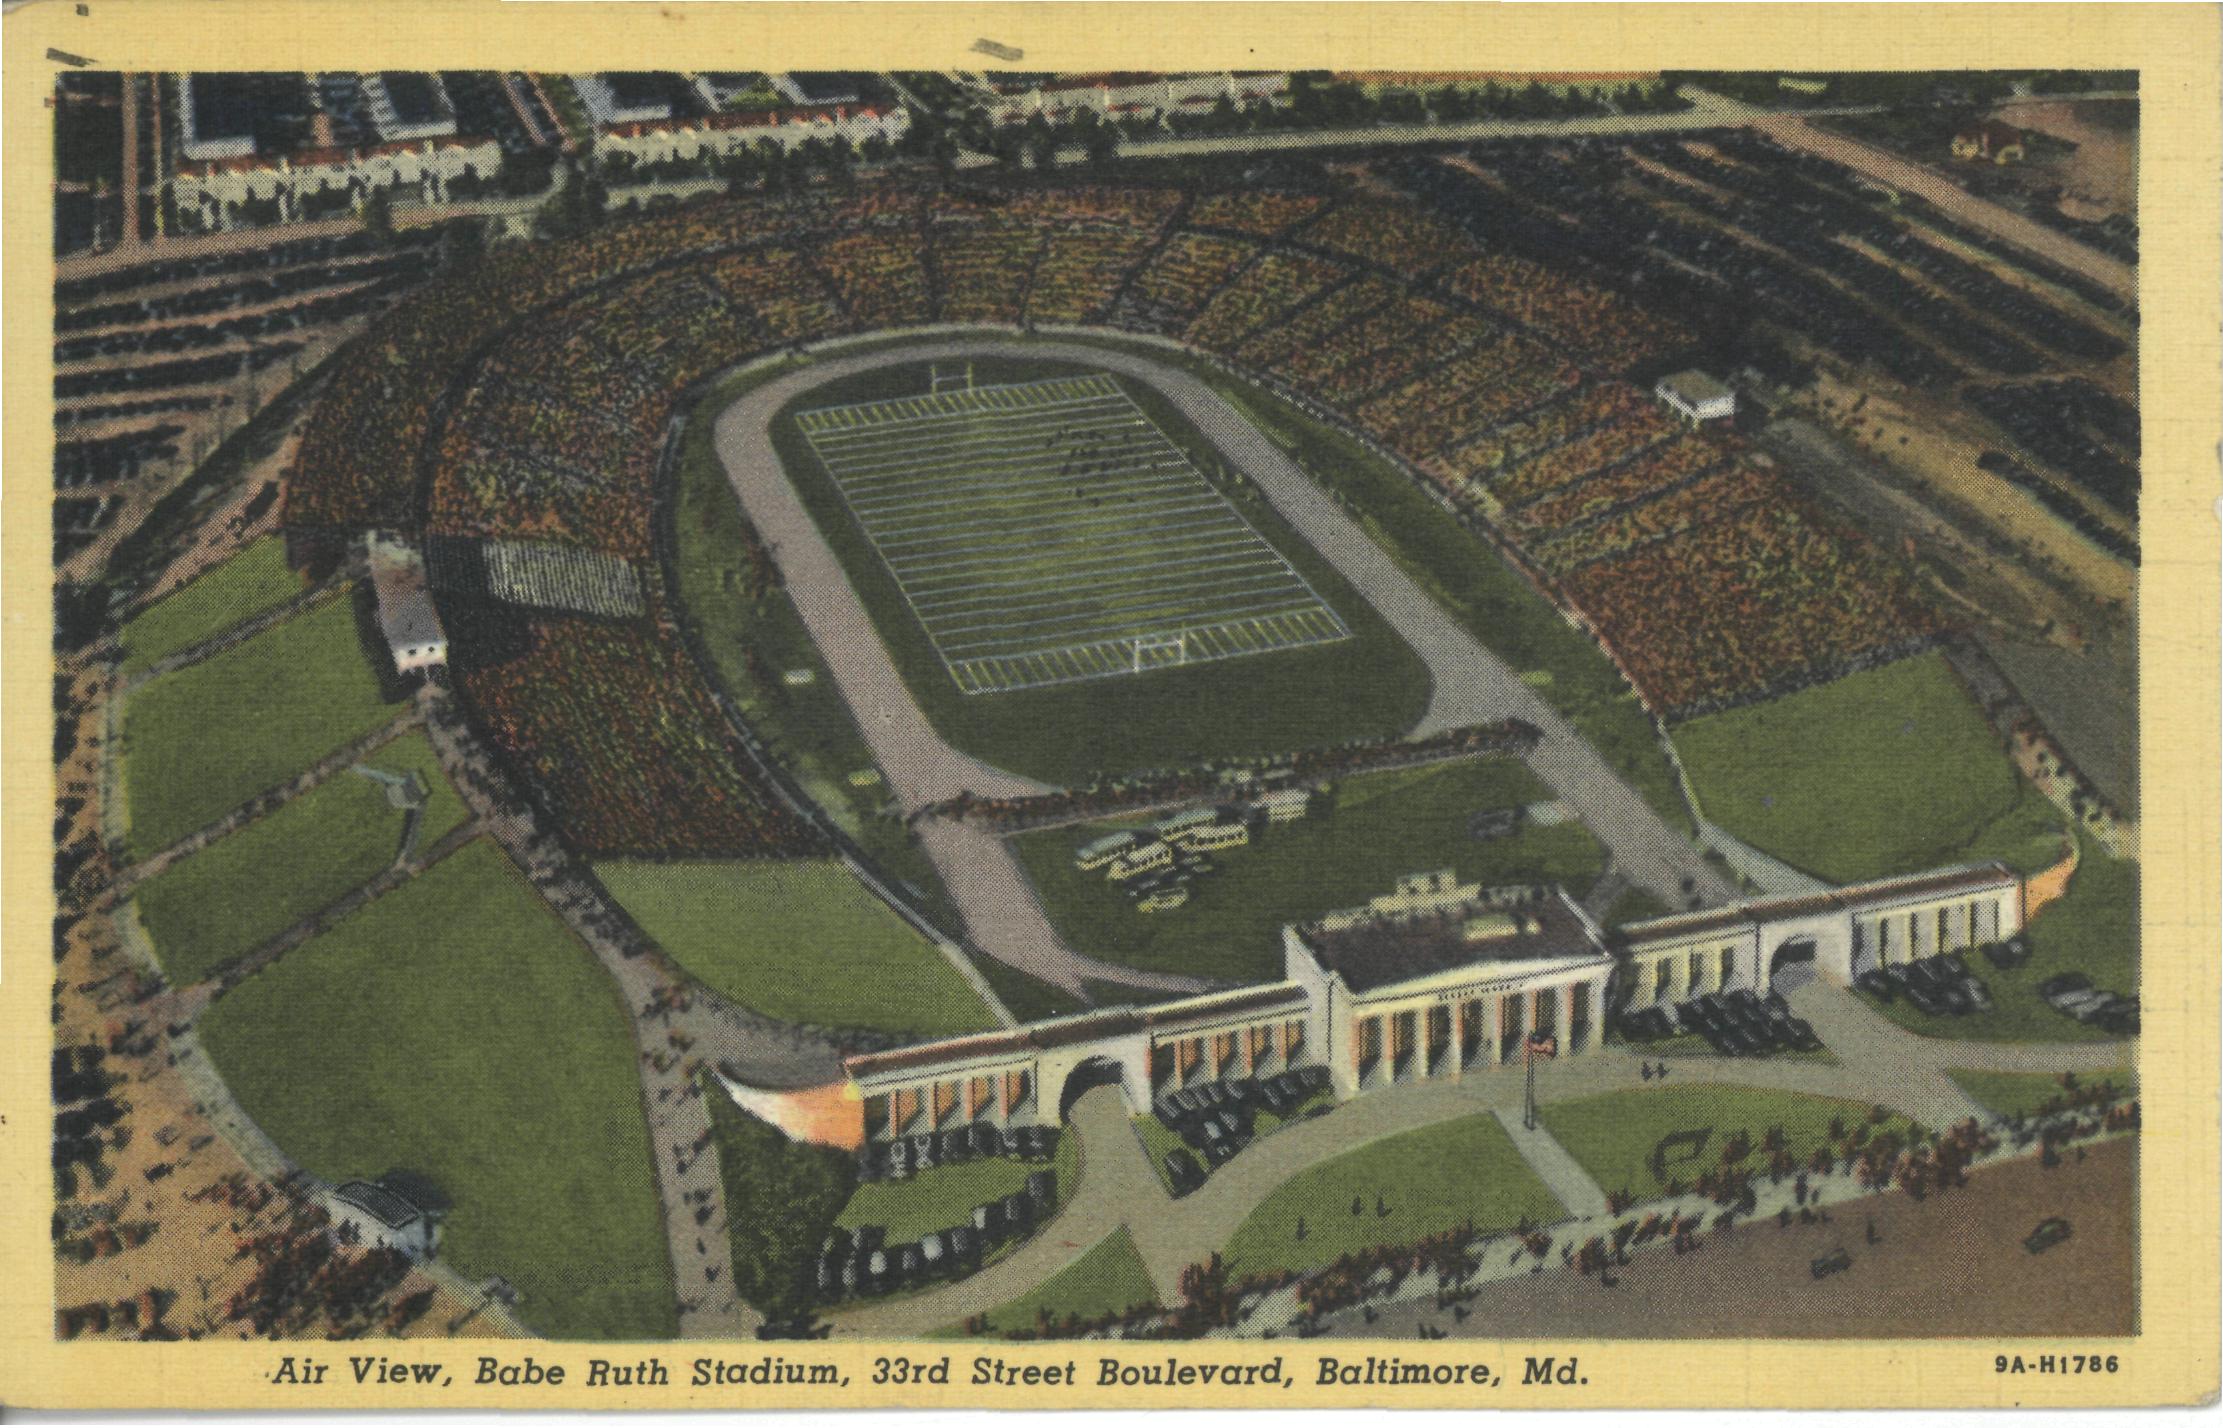 Postcard of Babe Ruth Stadium circa 1964